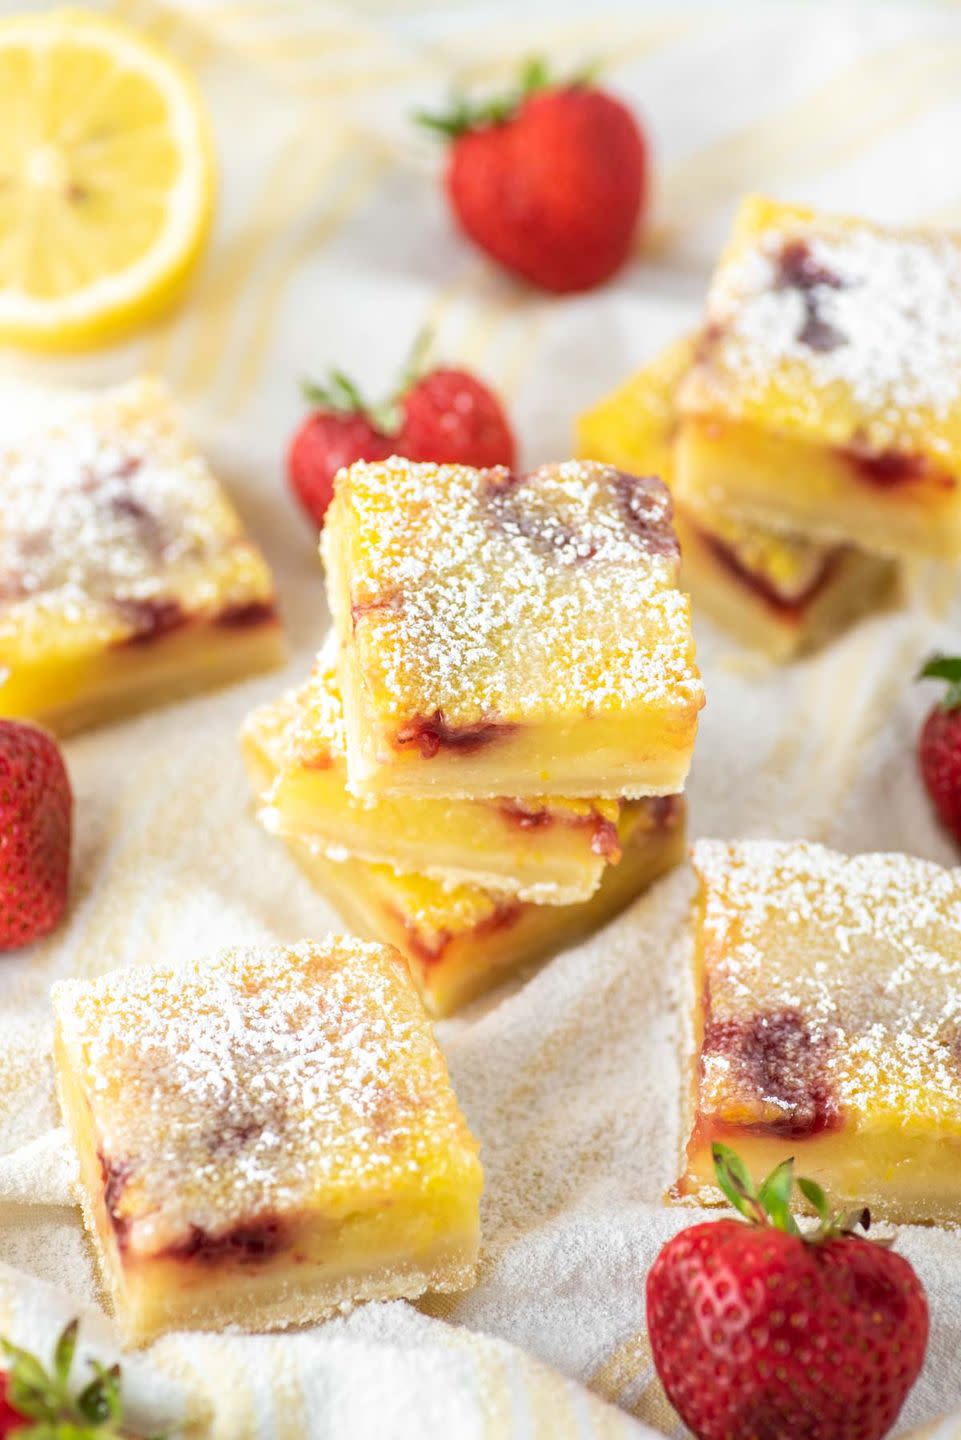 lemon desserts recipes strawberry lemon bars